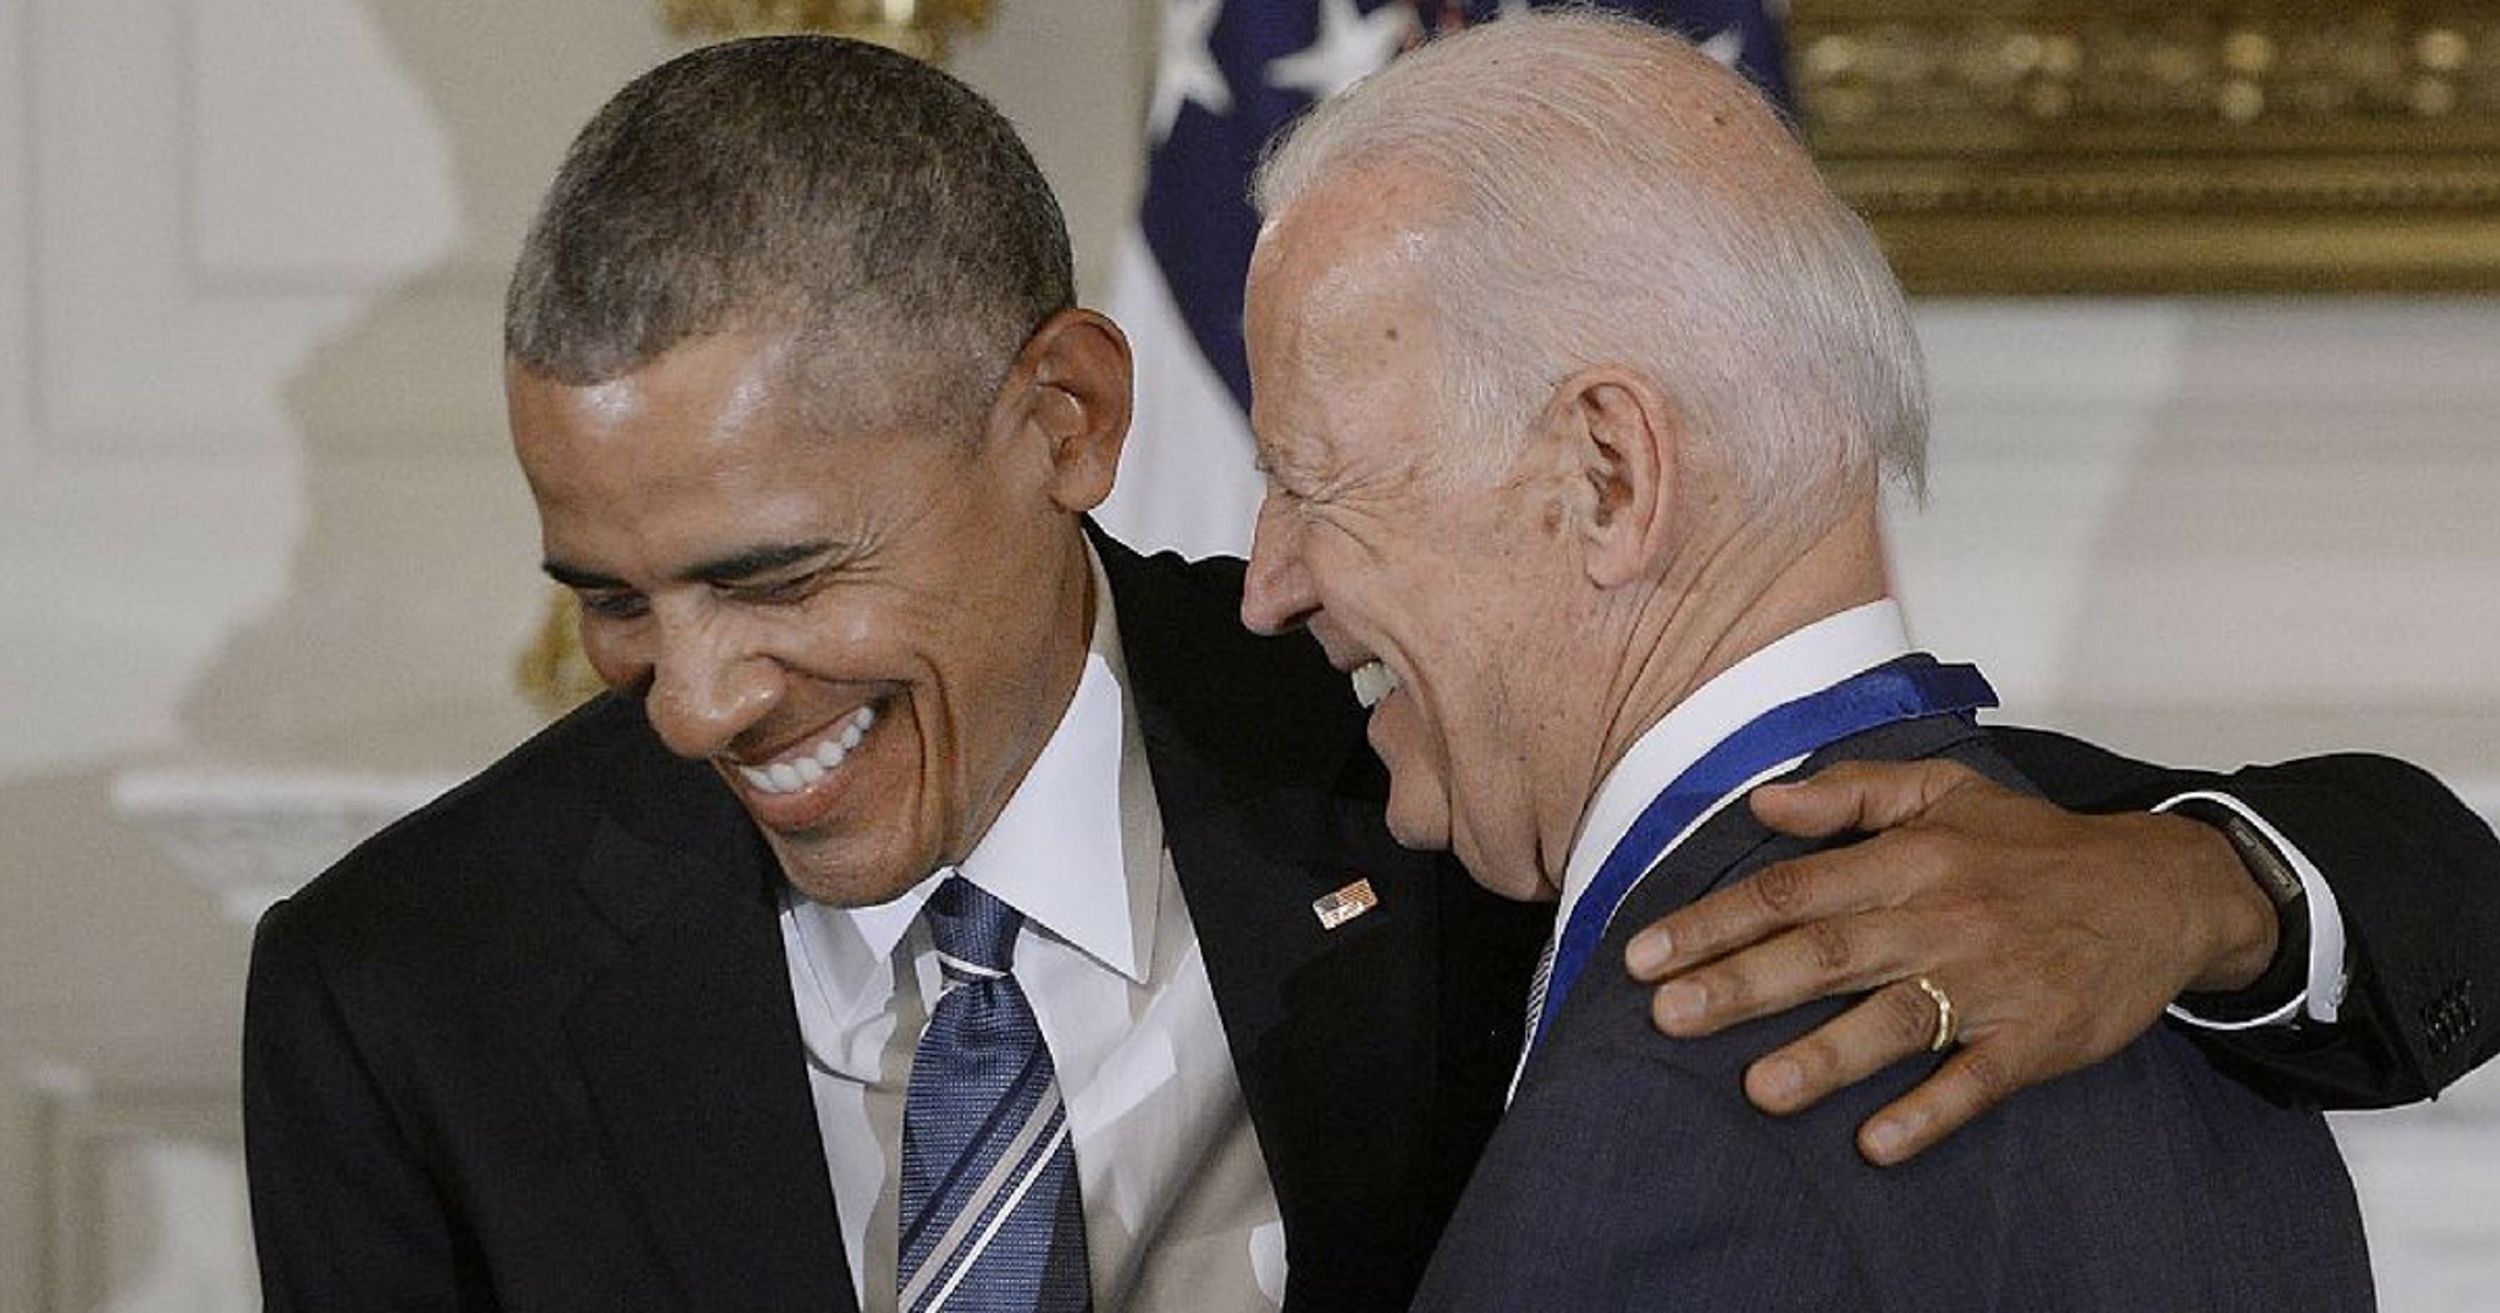 Barack Obama And Joe Biden Just Reignited Their Epic Bromance 😍